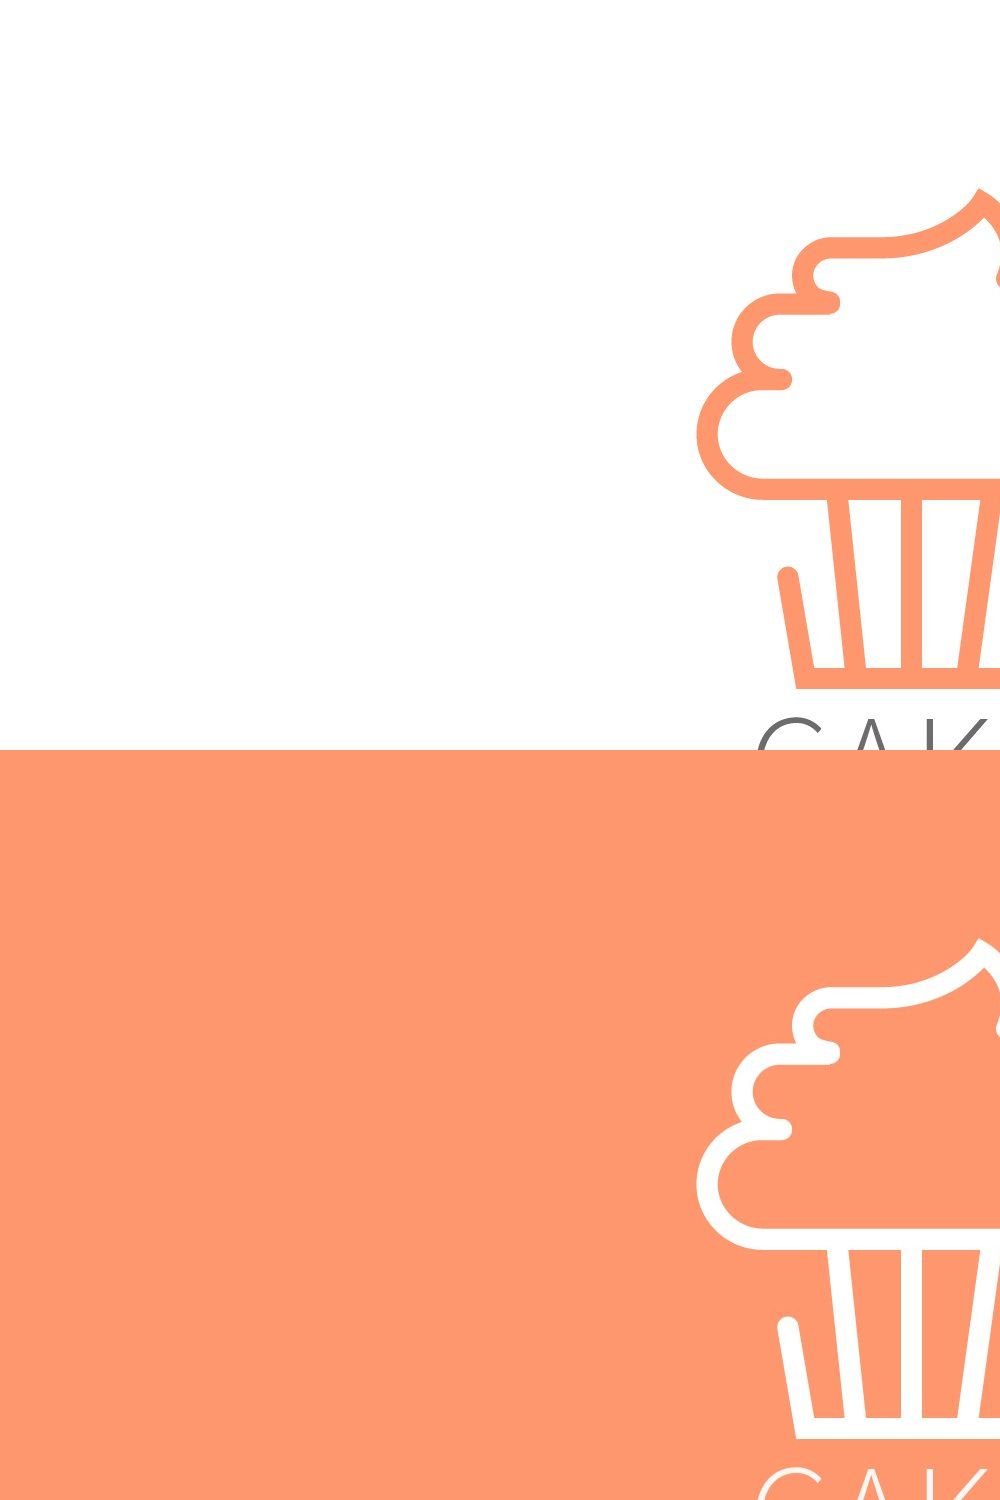 Cake logo pinterest preview image.